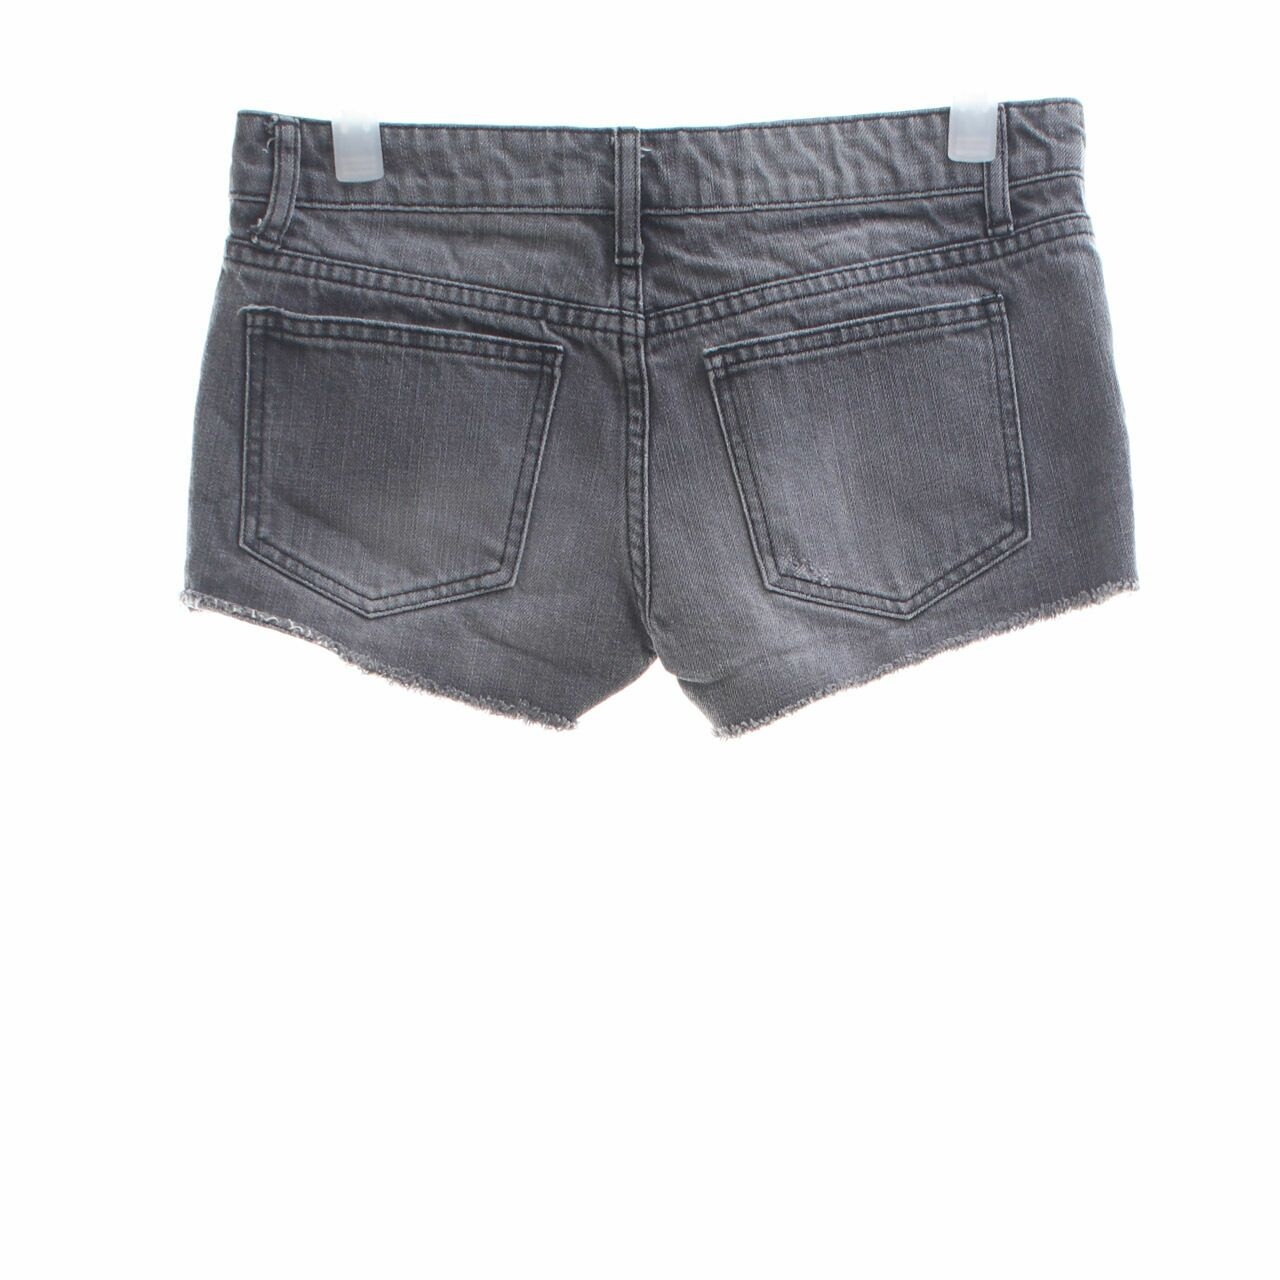 Haritage 1981 Forever 21 Grey Shorts